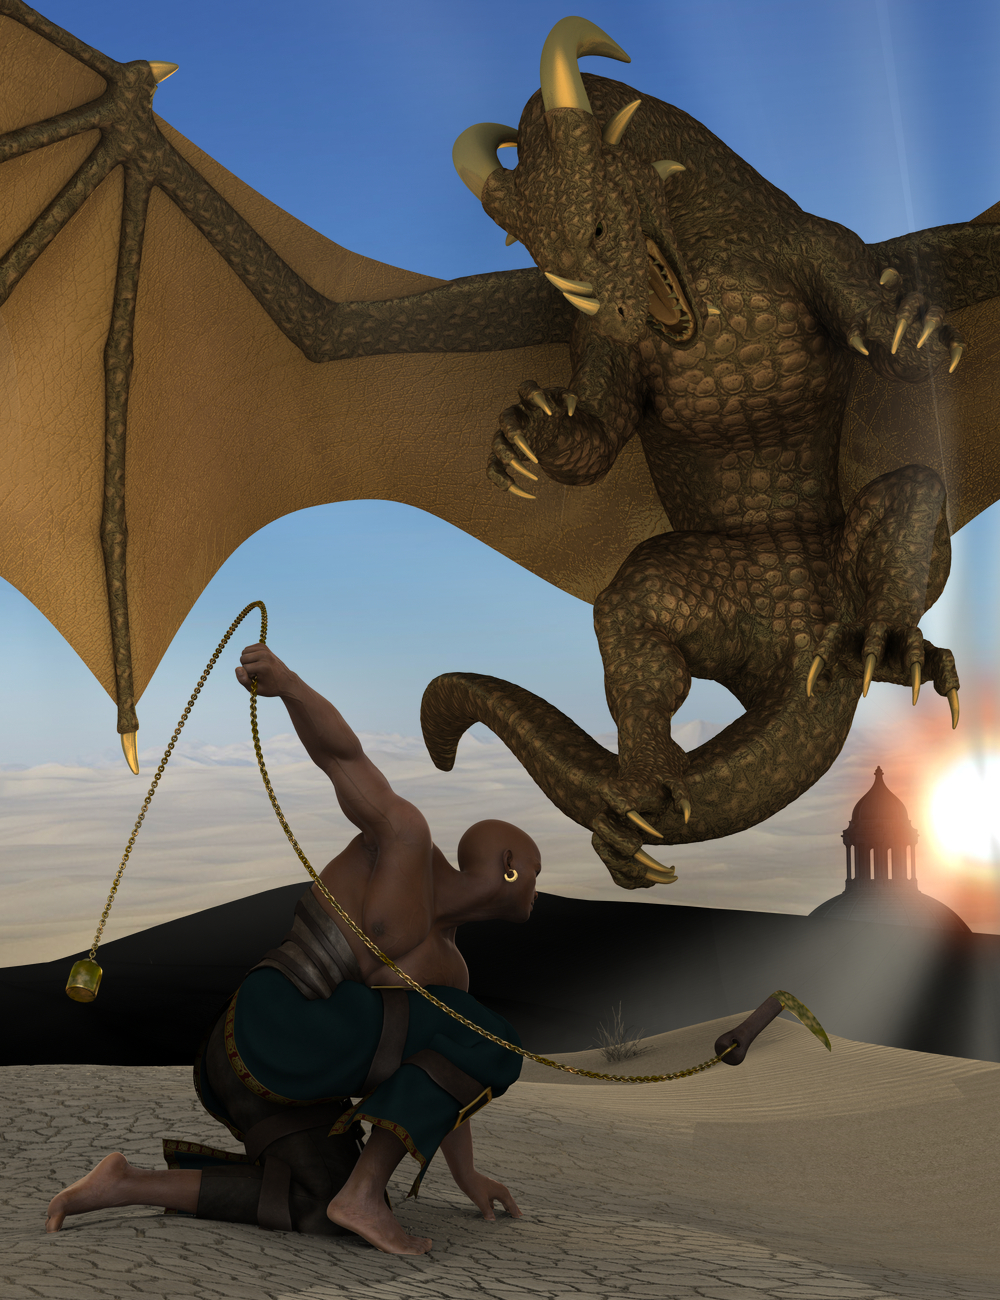 Creatures of Legend for DAZ Dragon 3 by: Sickleyield, 3D Models by Daz 3D